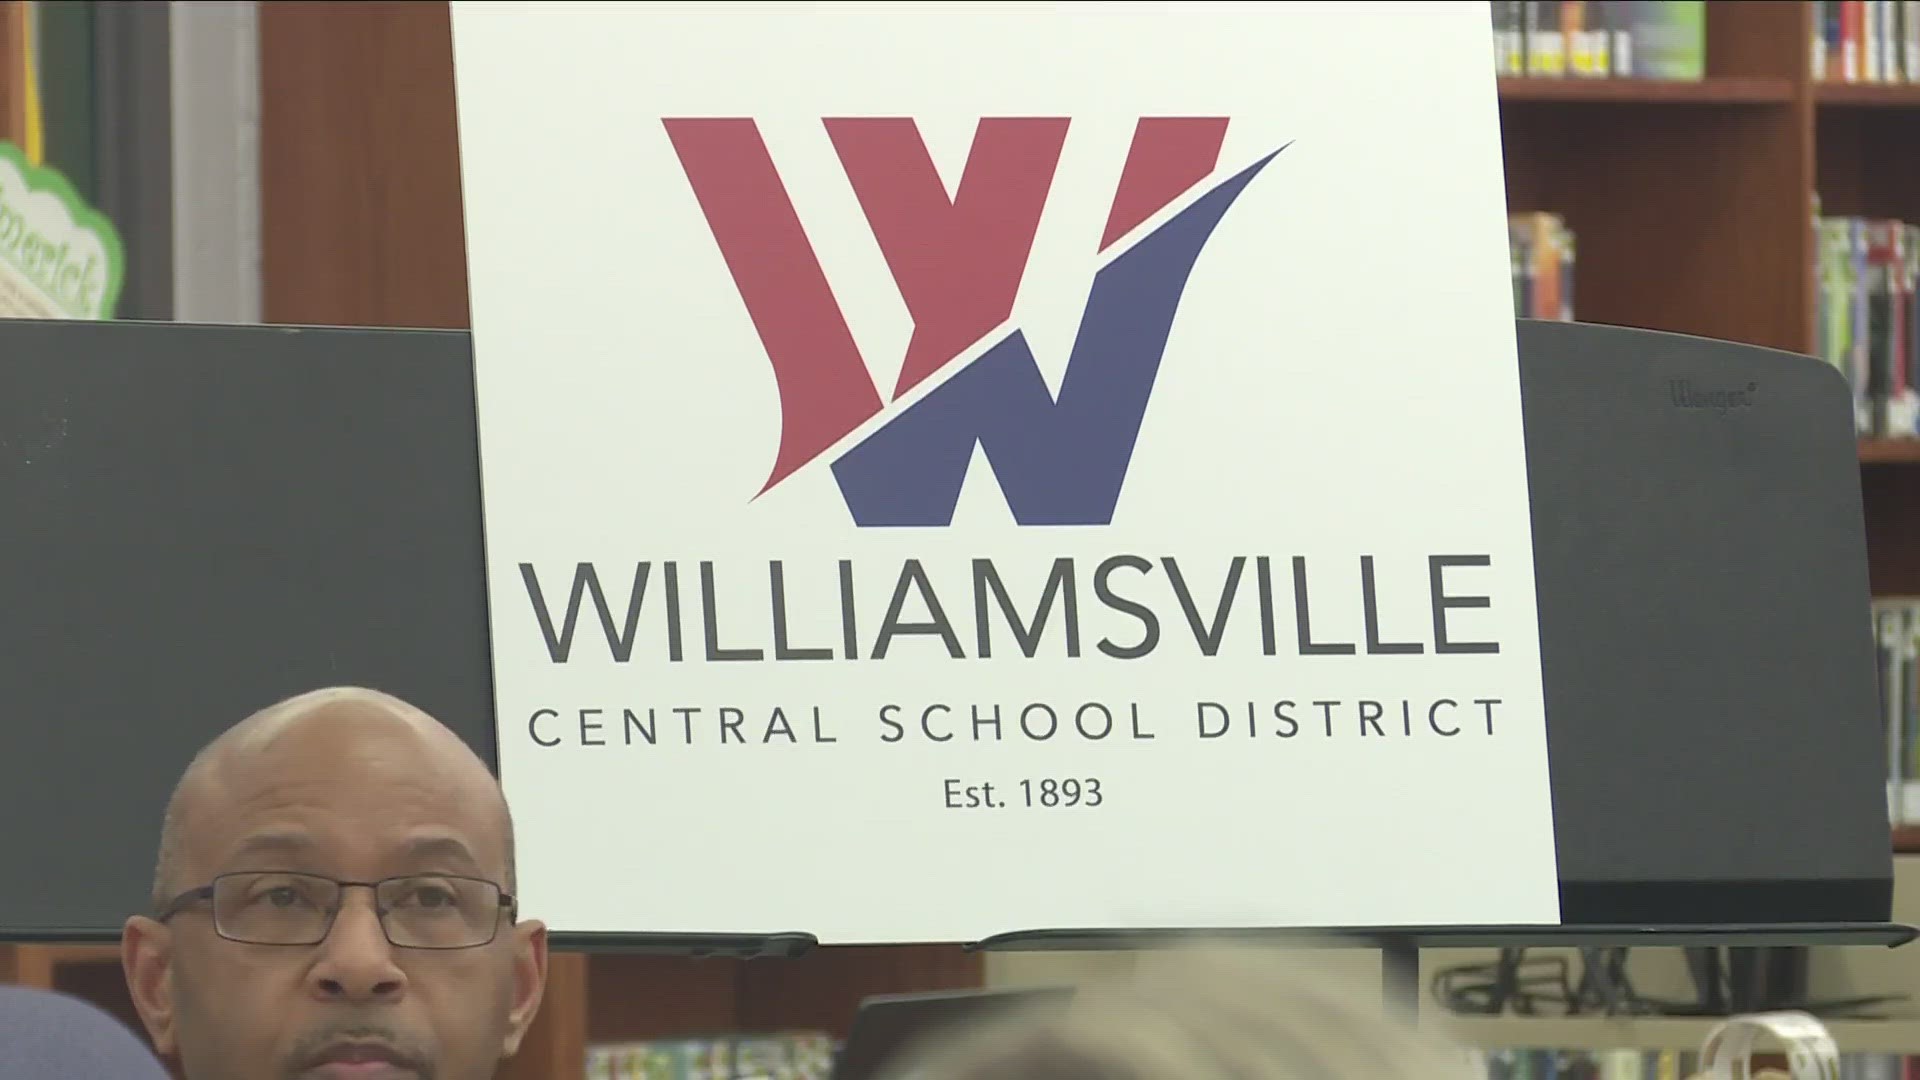 The Williamsville Central School District unveils new logo